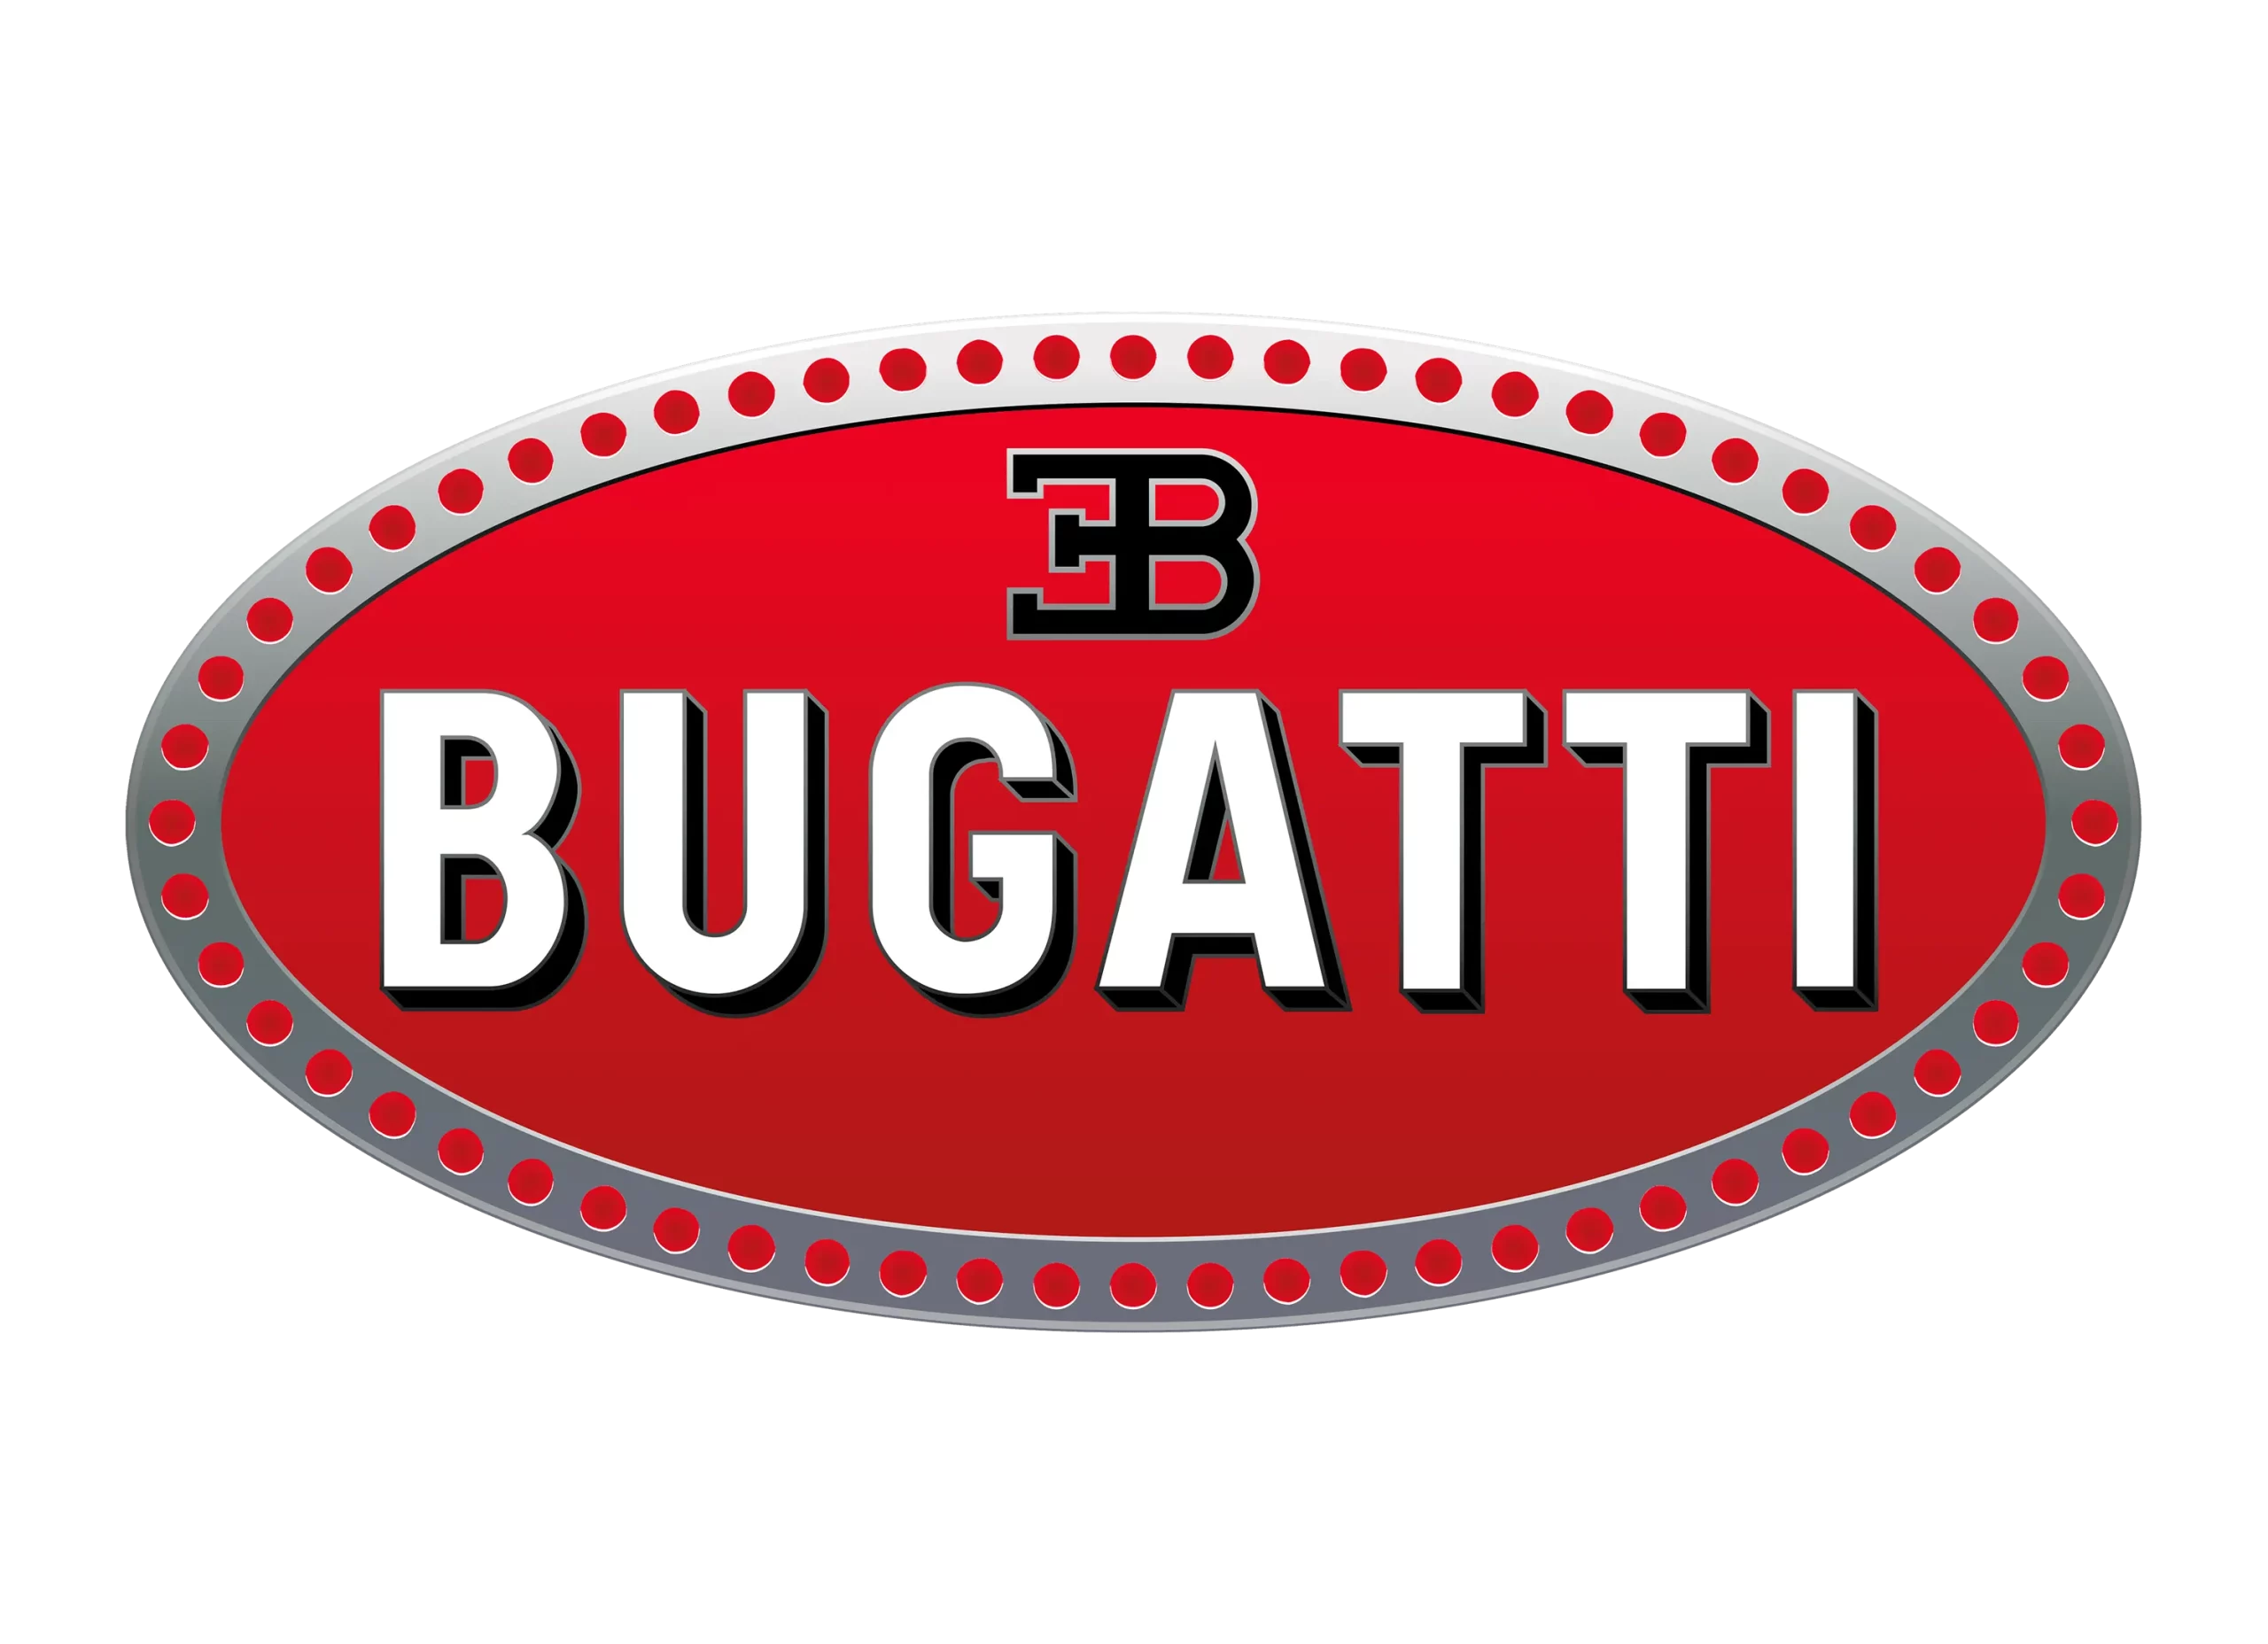 Bugatti logo 2015